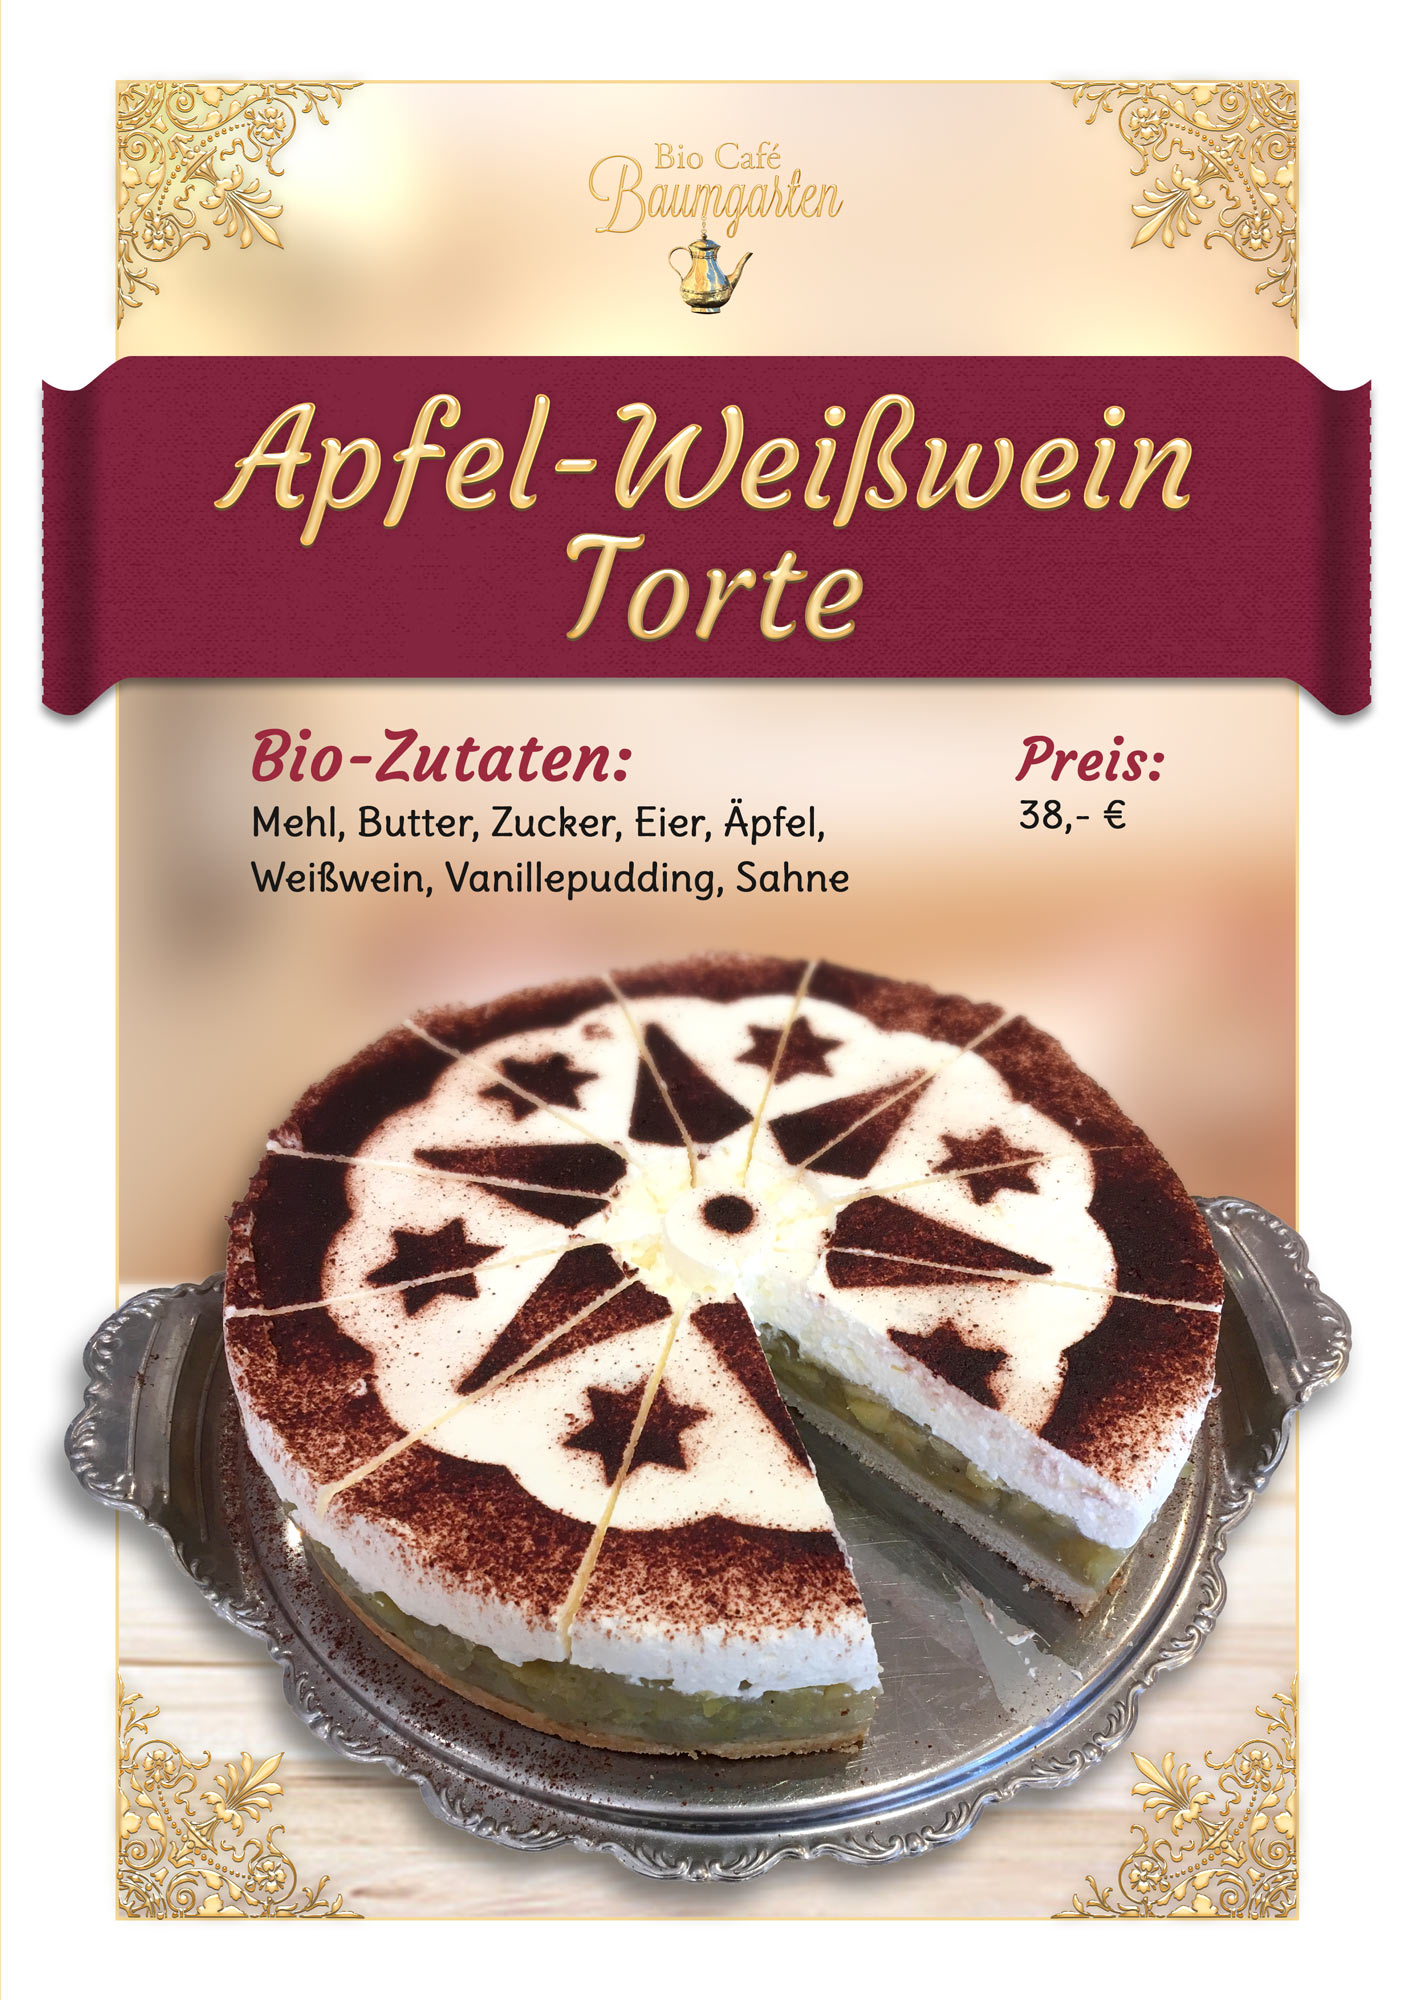 Apfel-Weisswein-Torte